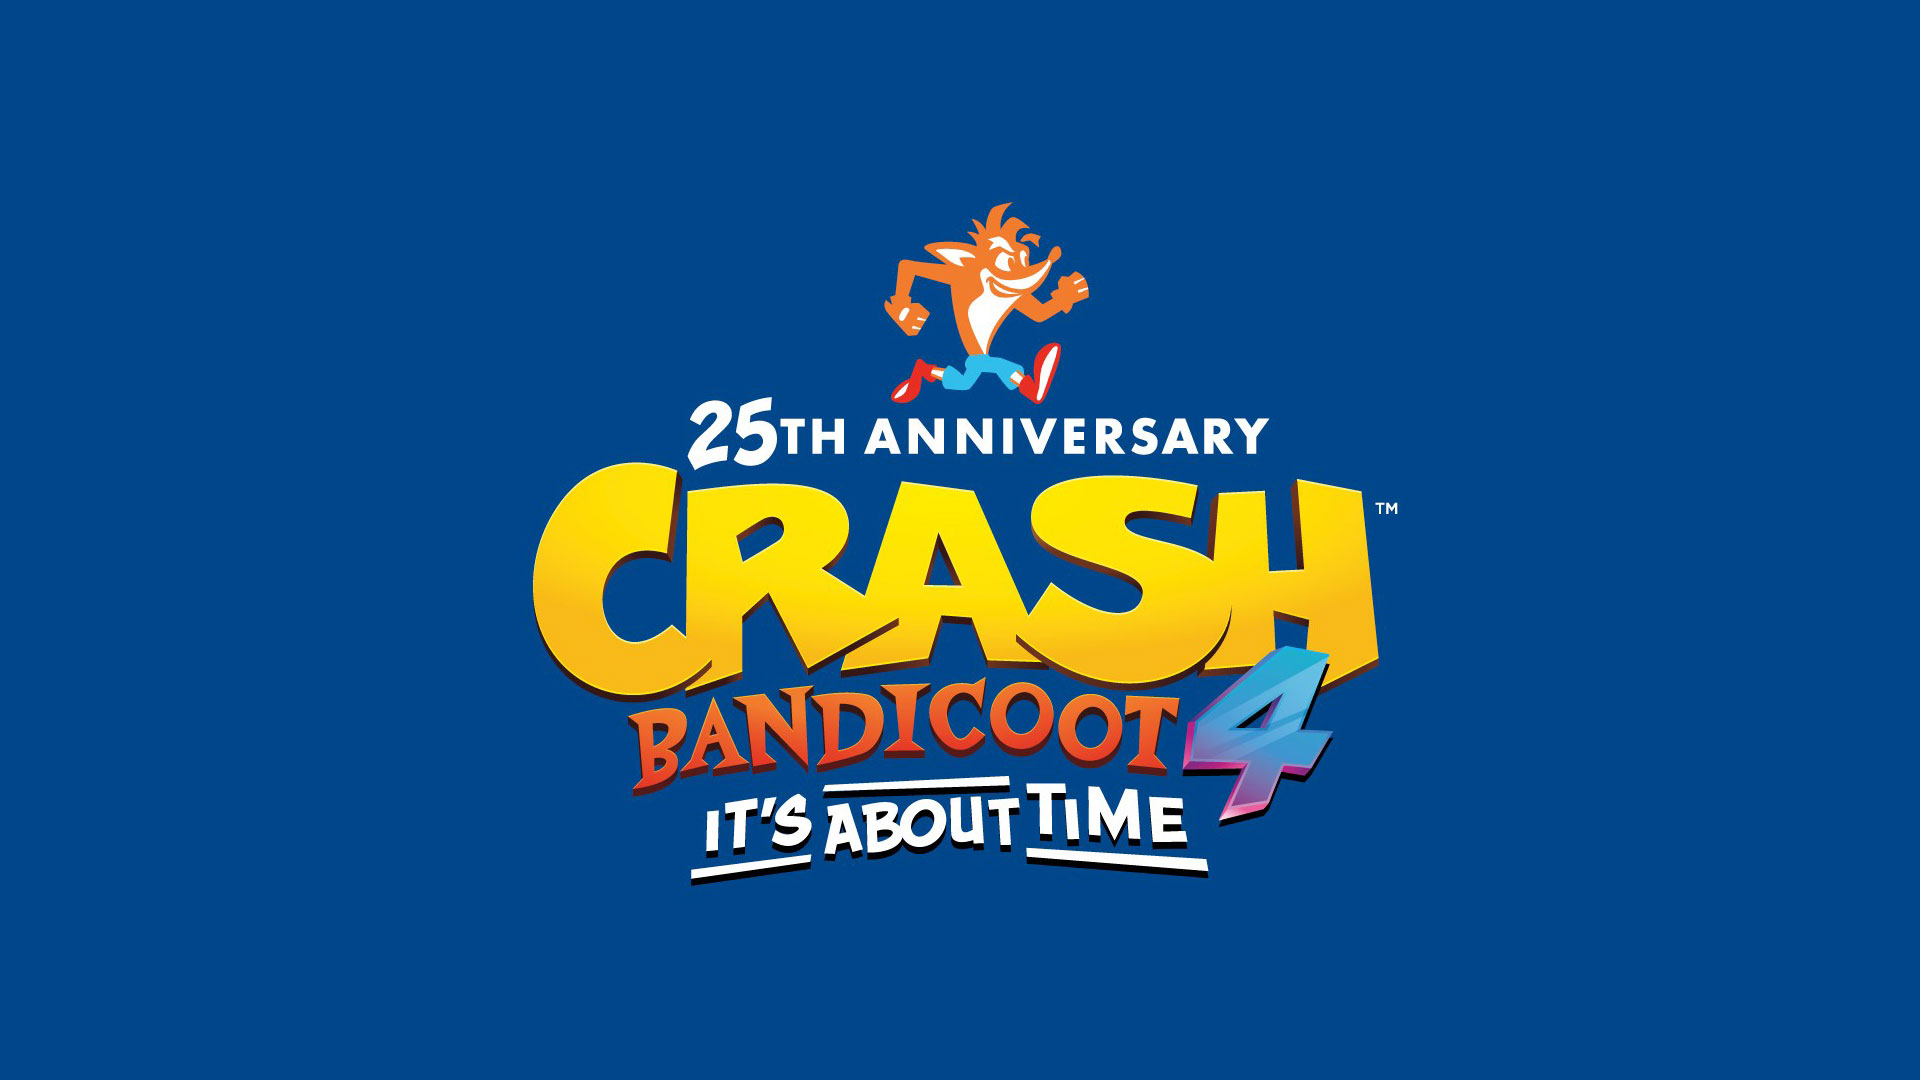 crash bandicoot logo